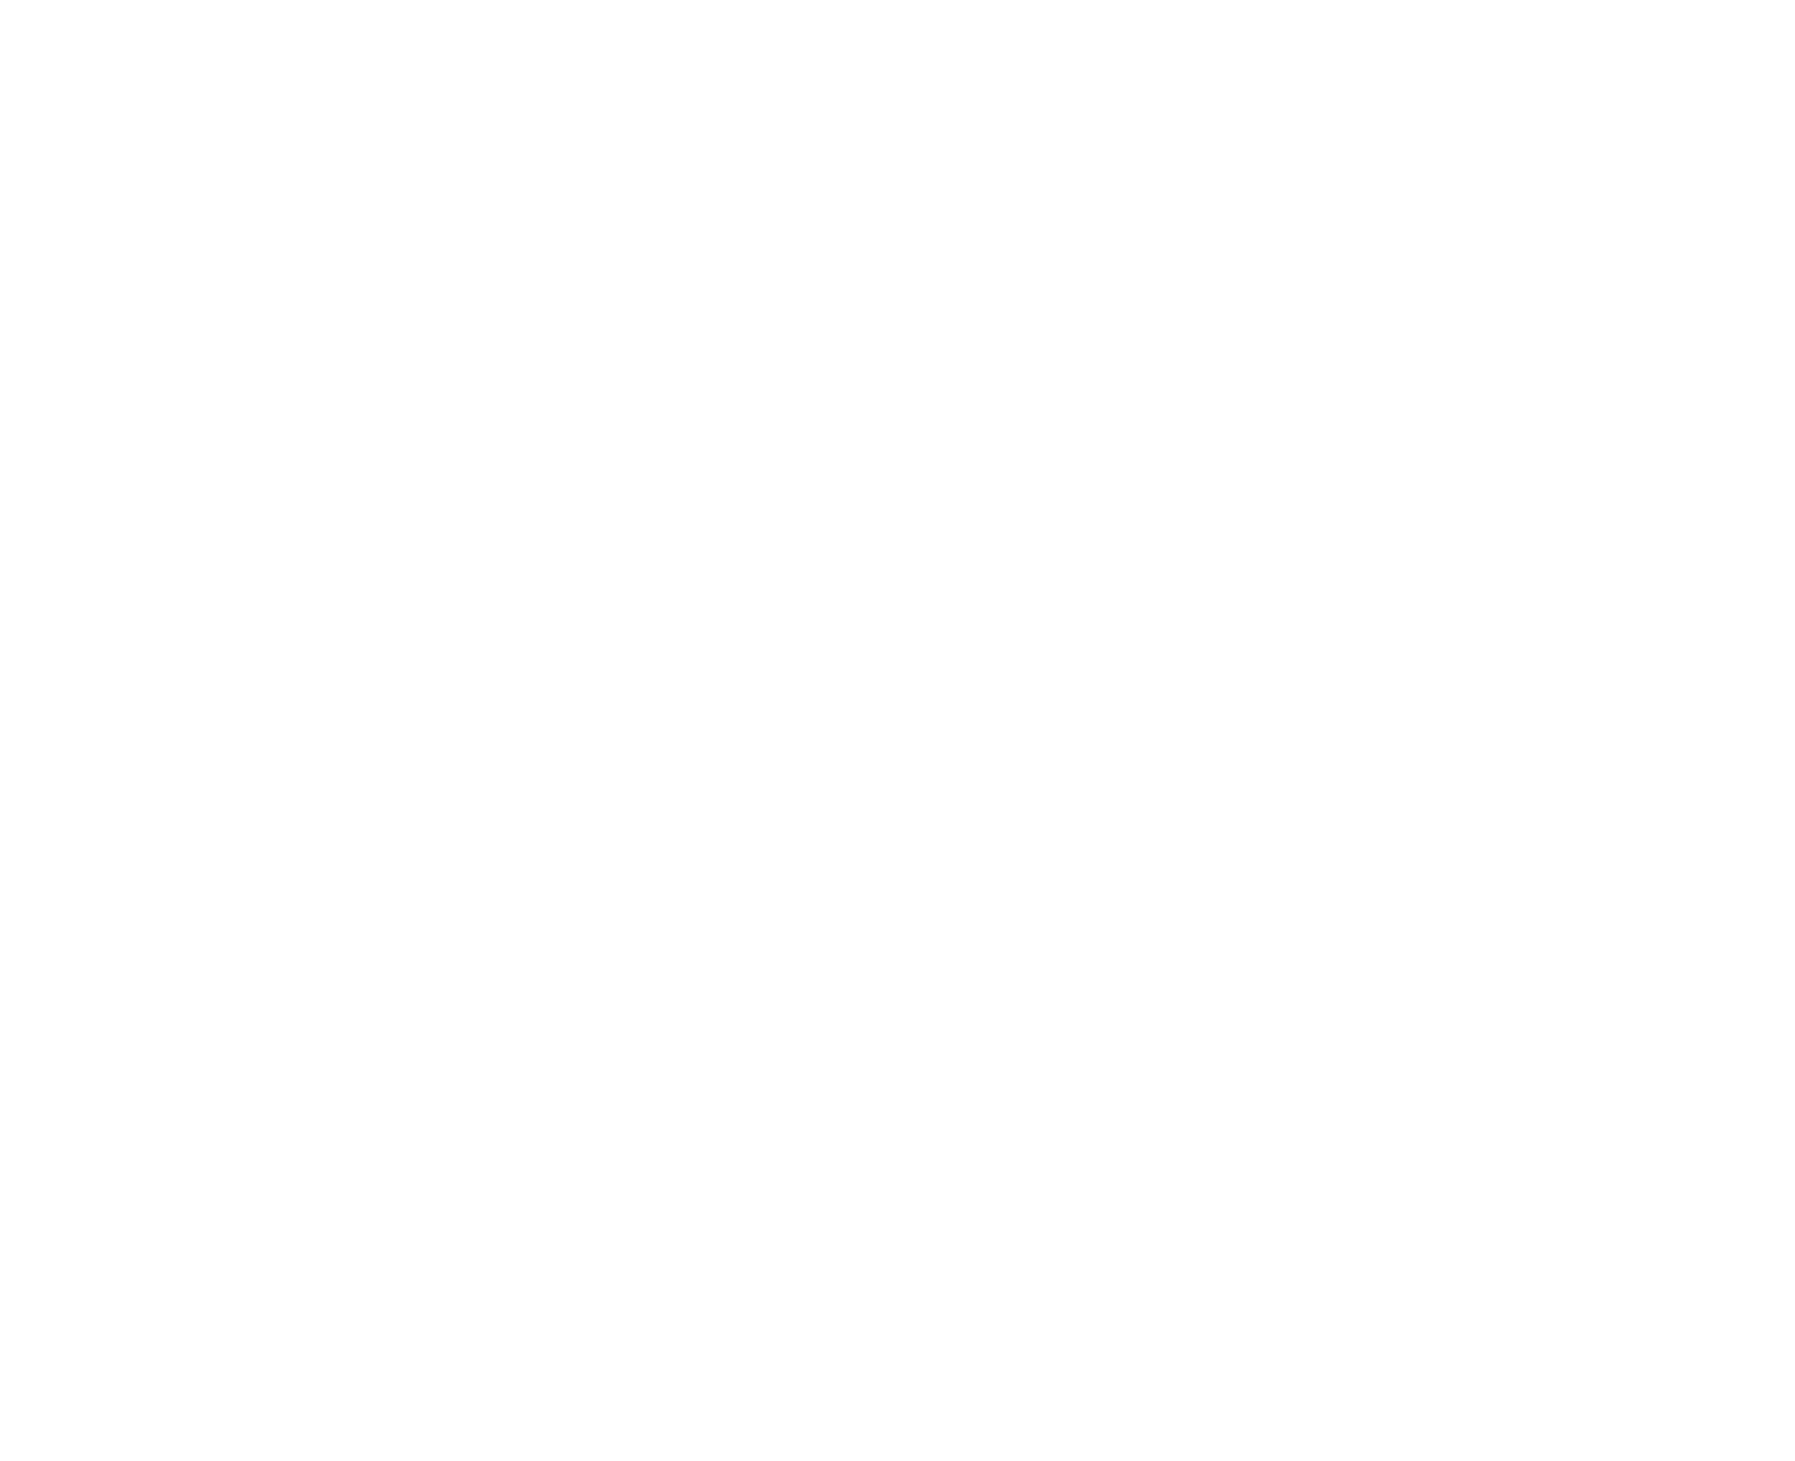 Centro Marino Panamá 